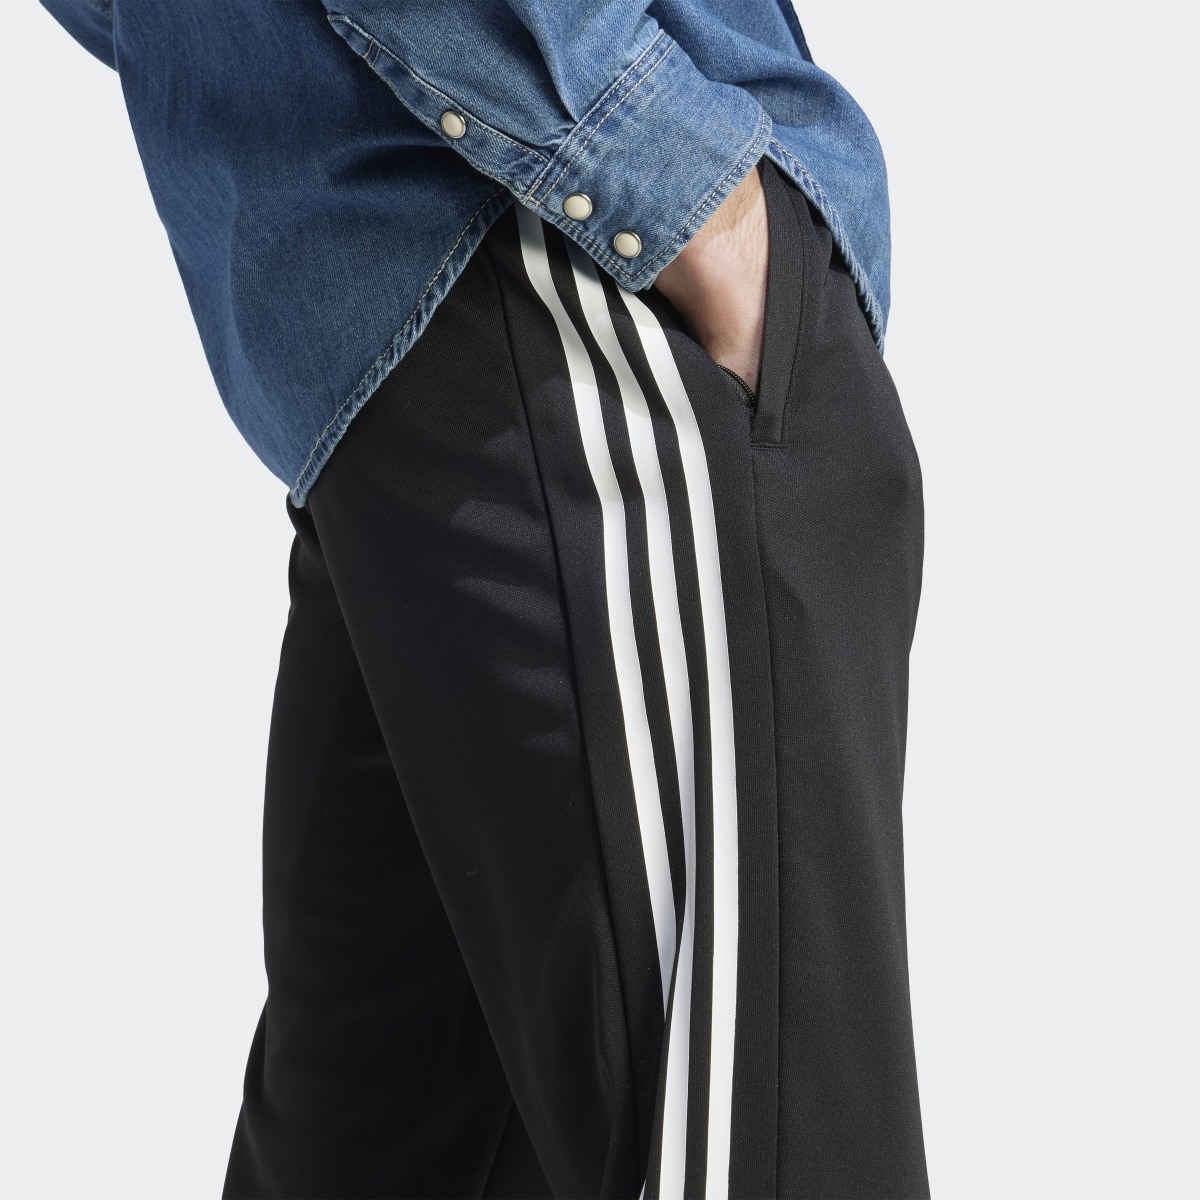 Adidas Pants Tiro Wordmark. 7